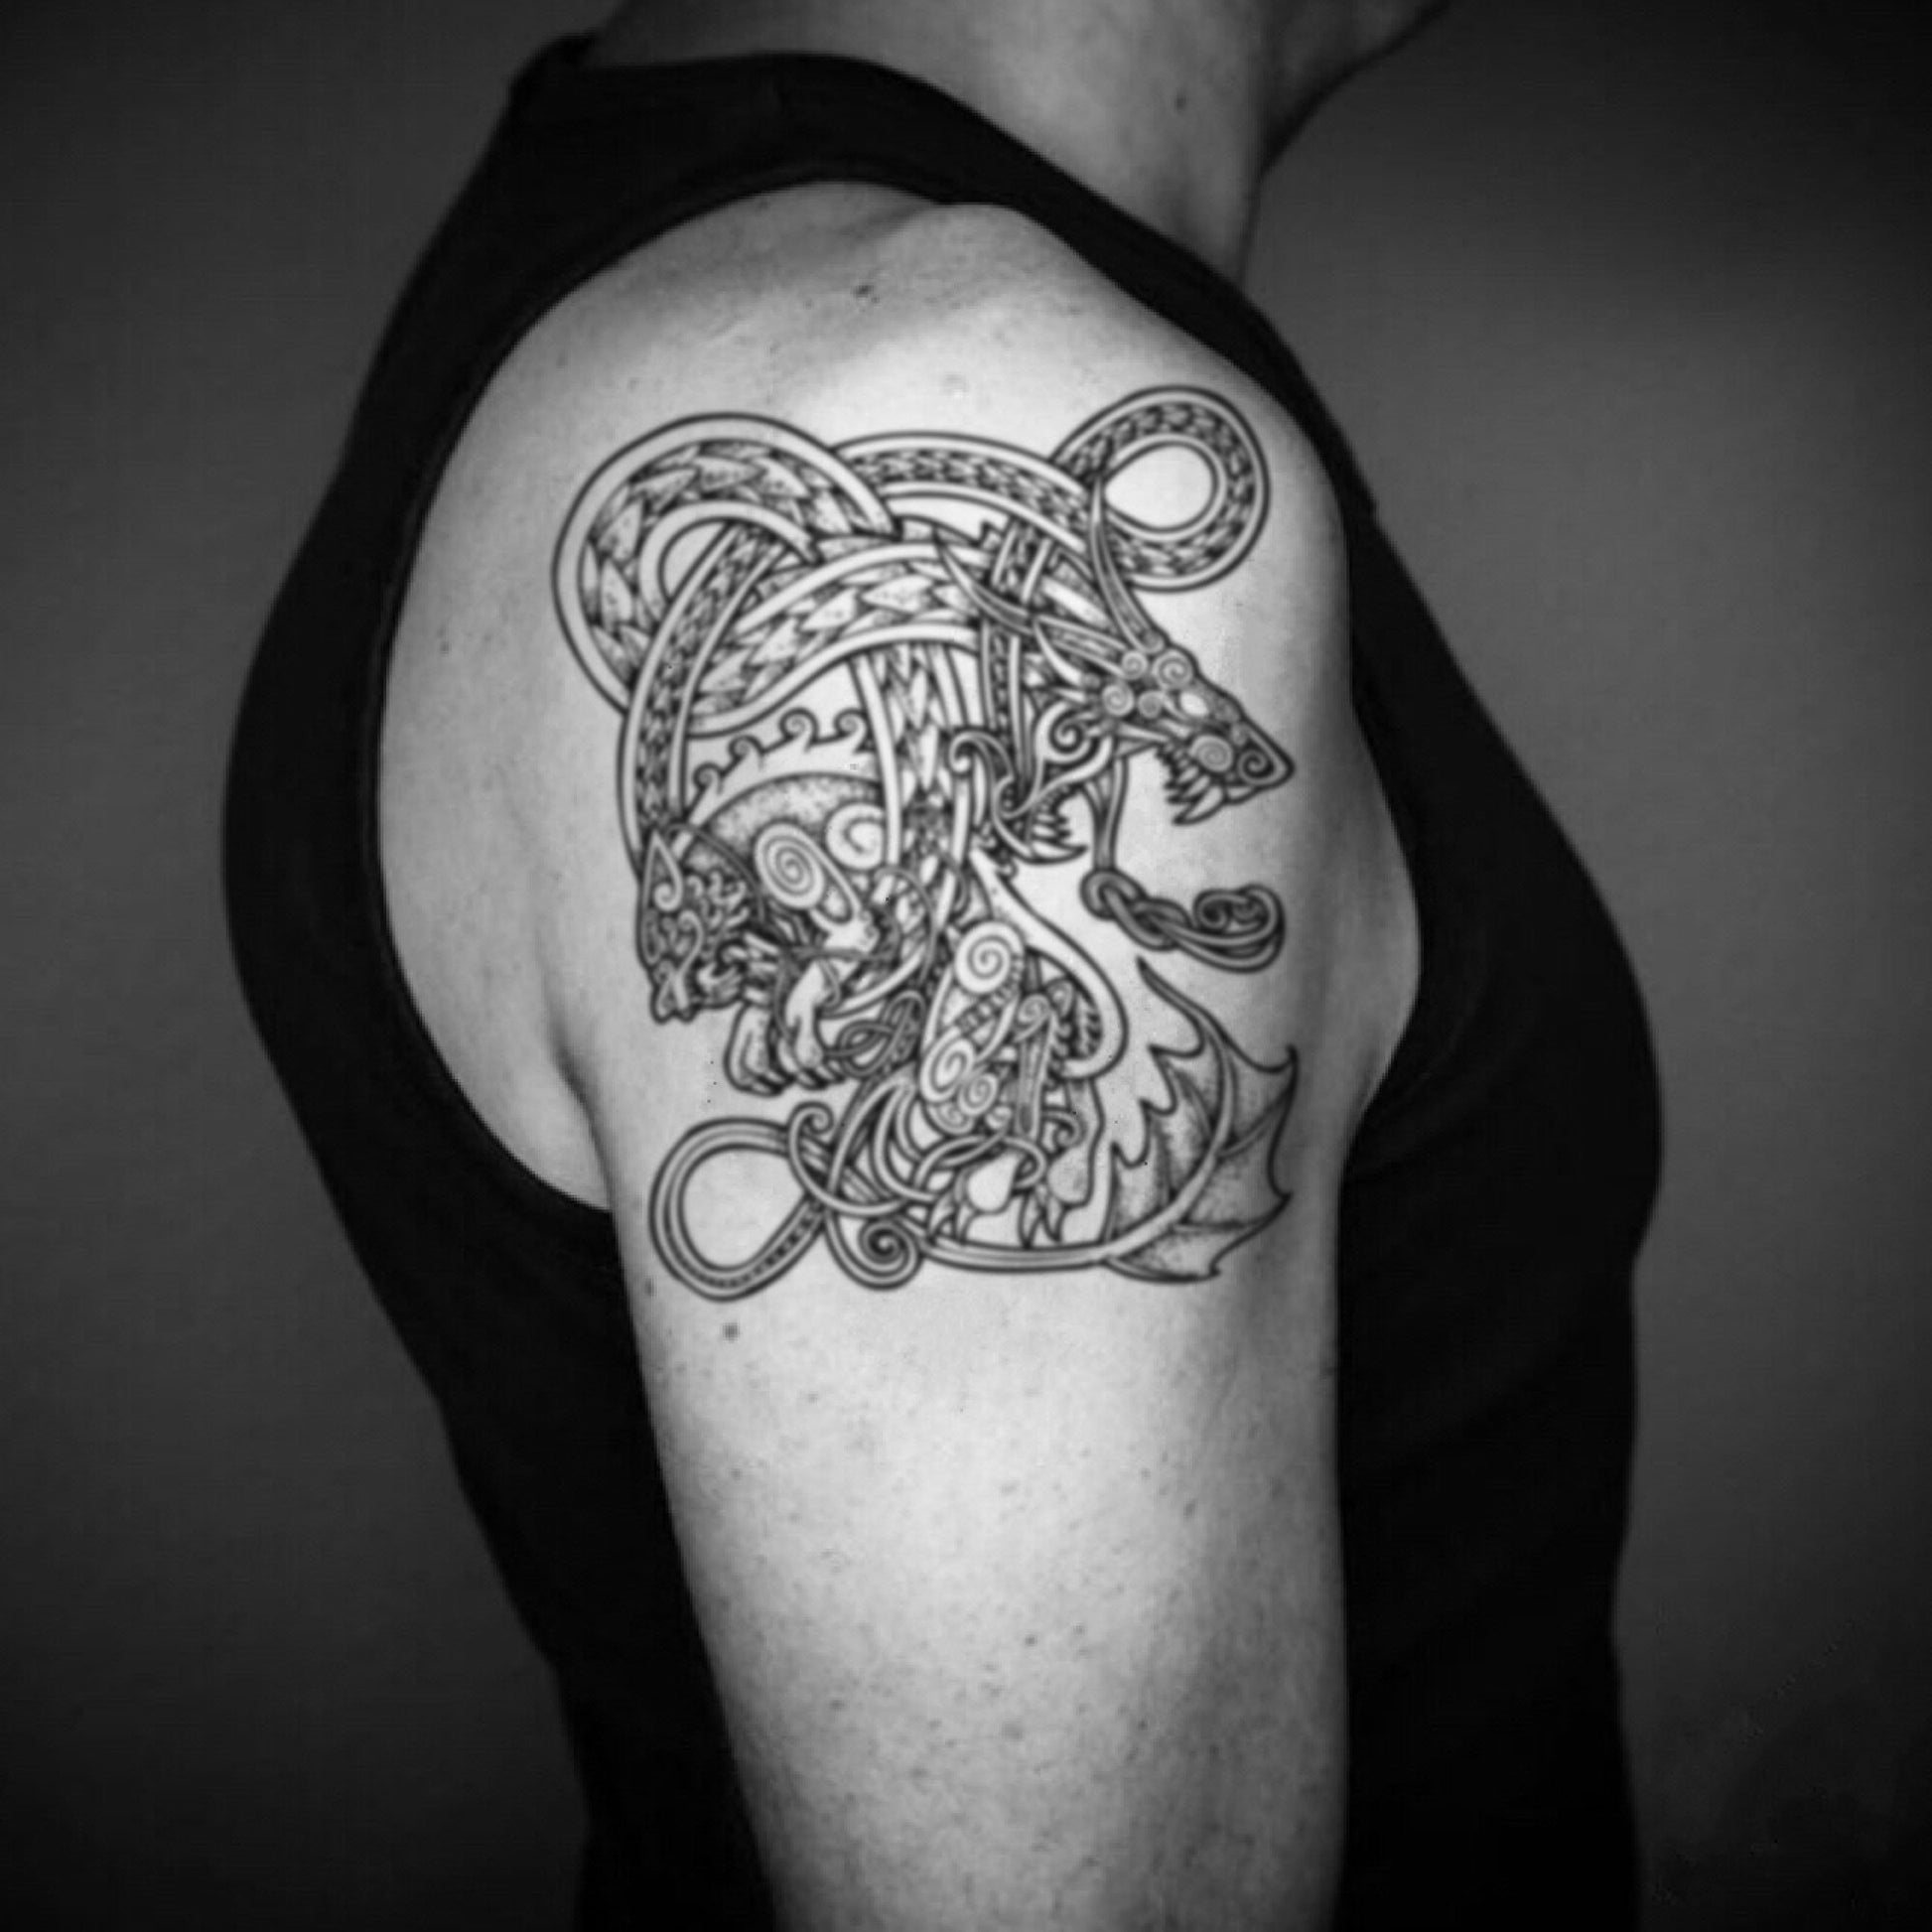 fake big tyr & fenrir norse mythology viking celtic armor wolf hand tribal temporary tattoo sticker design idea on upper arm